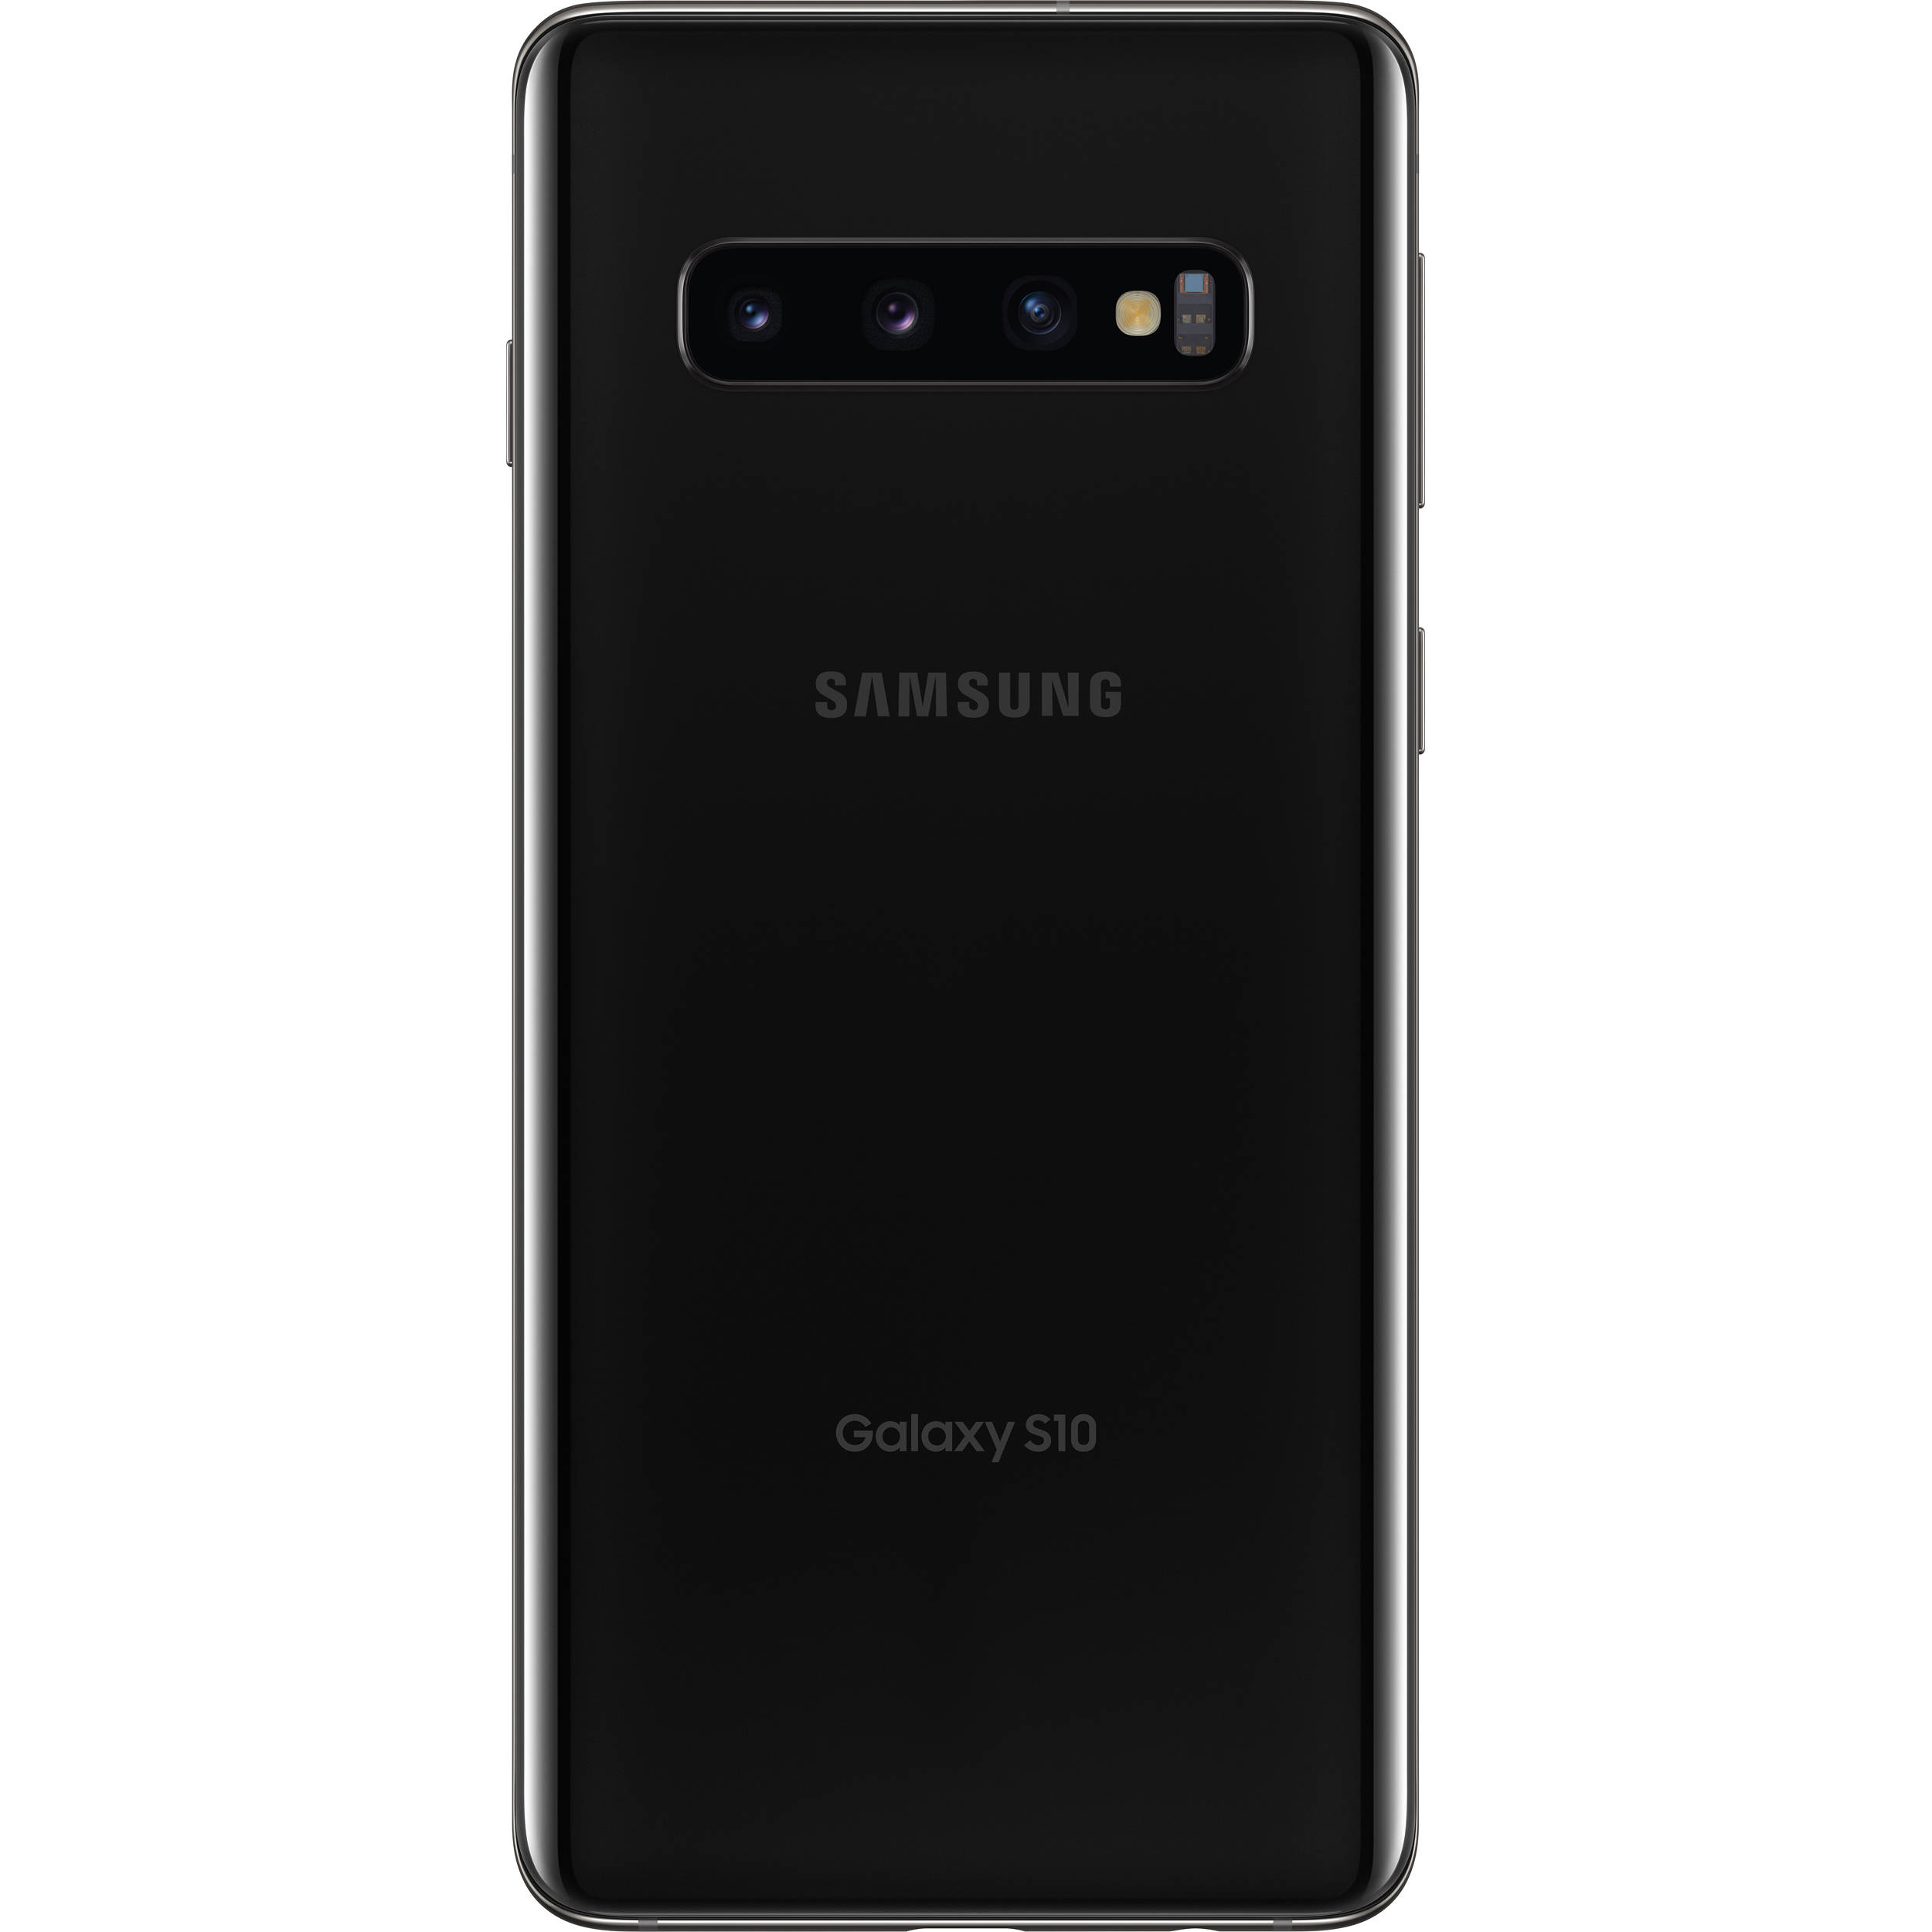 SAMSUNG Galaxy S10 G973U 128GB GSM/CDMA Unlocked Android Phone - Prism Black (Used) - image 2 of 4